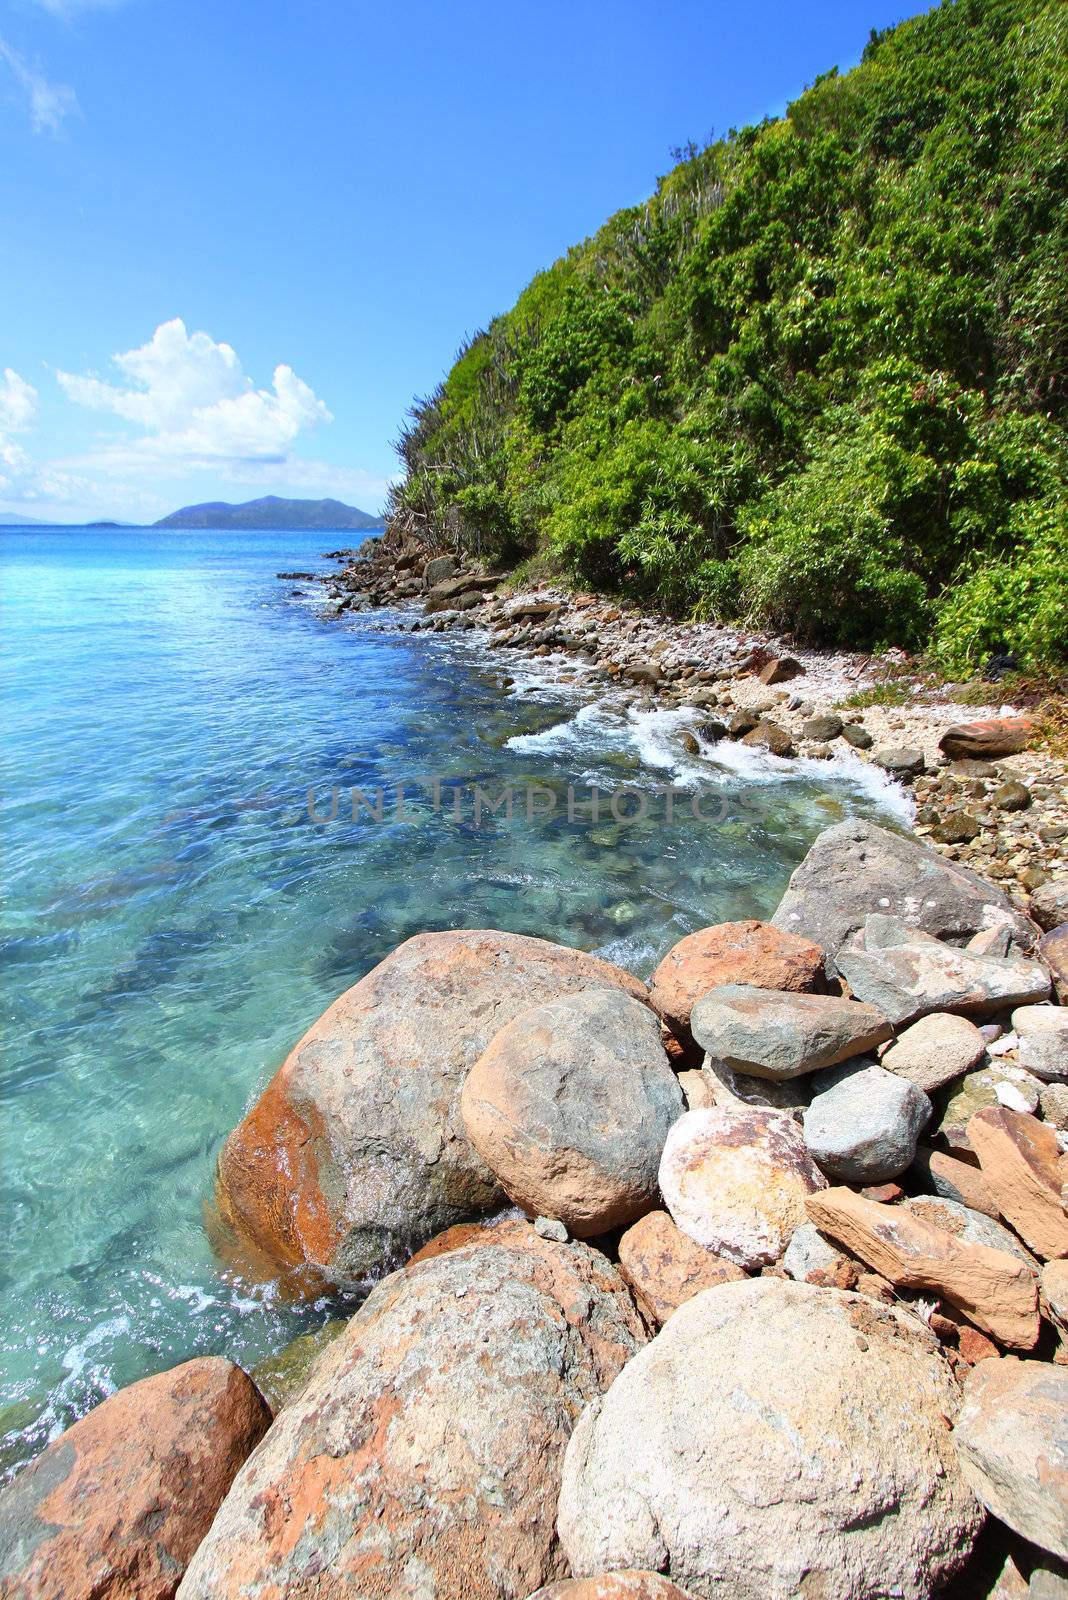 A rugged rocky coastline along beautiful Brewers Bay of Tortola - BVI.